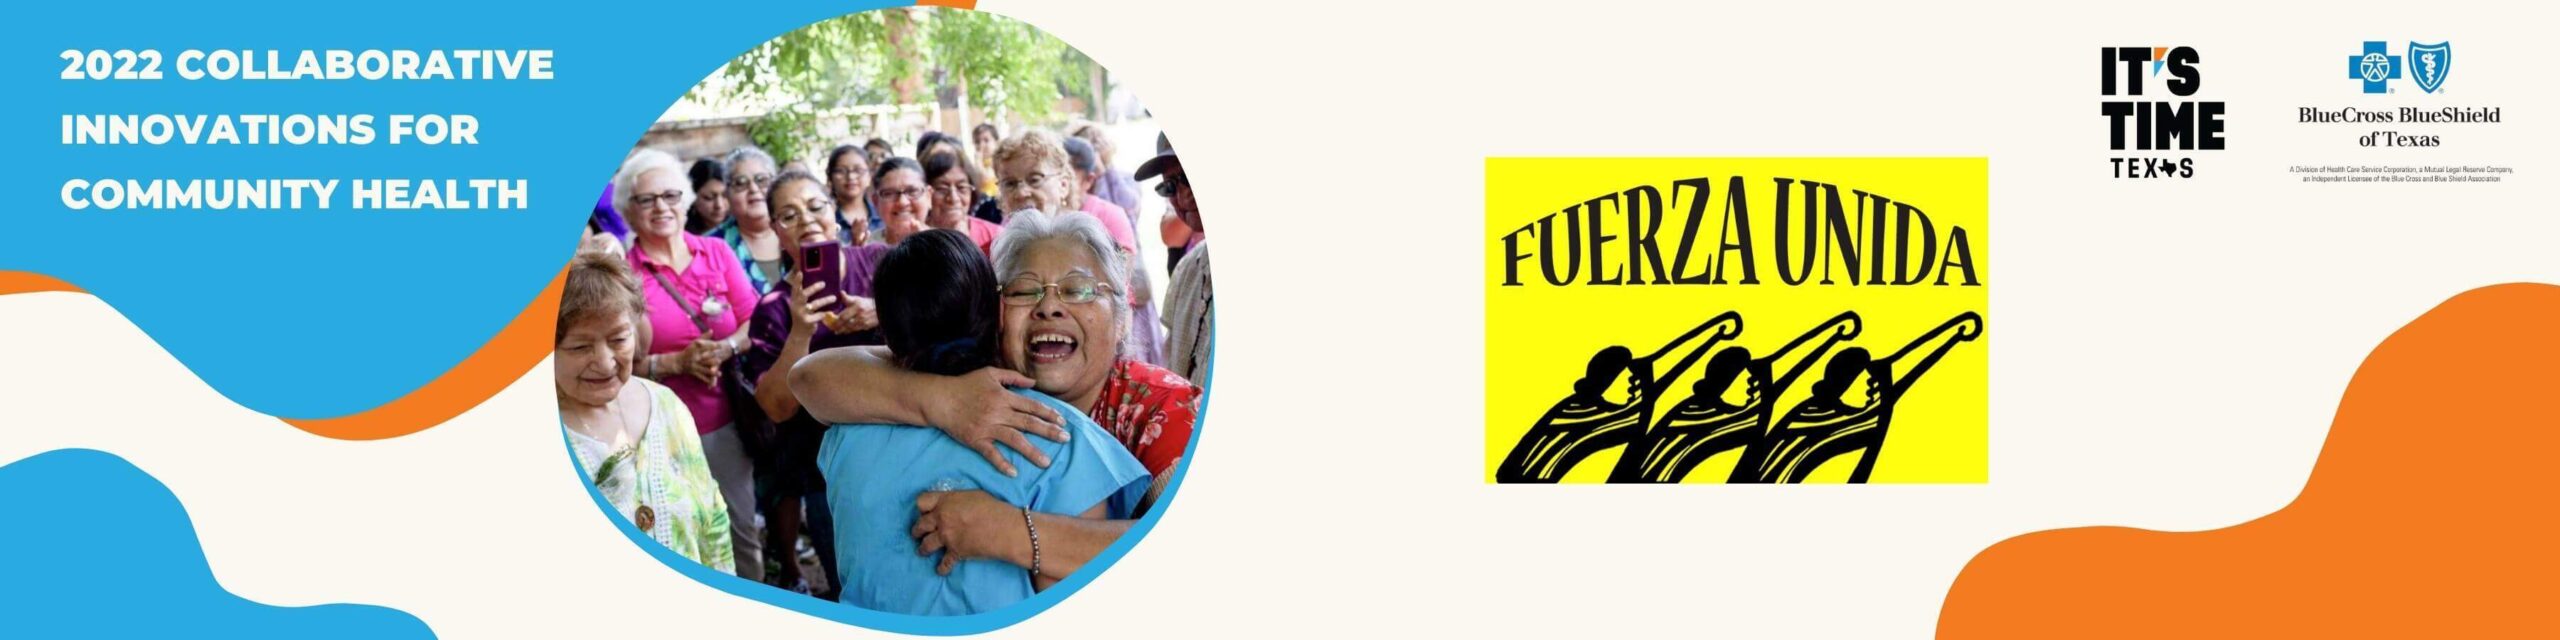 2022 Collaborative Innovations for Community Health Spotlight - Fuerza Unida